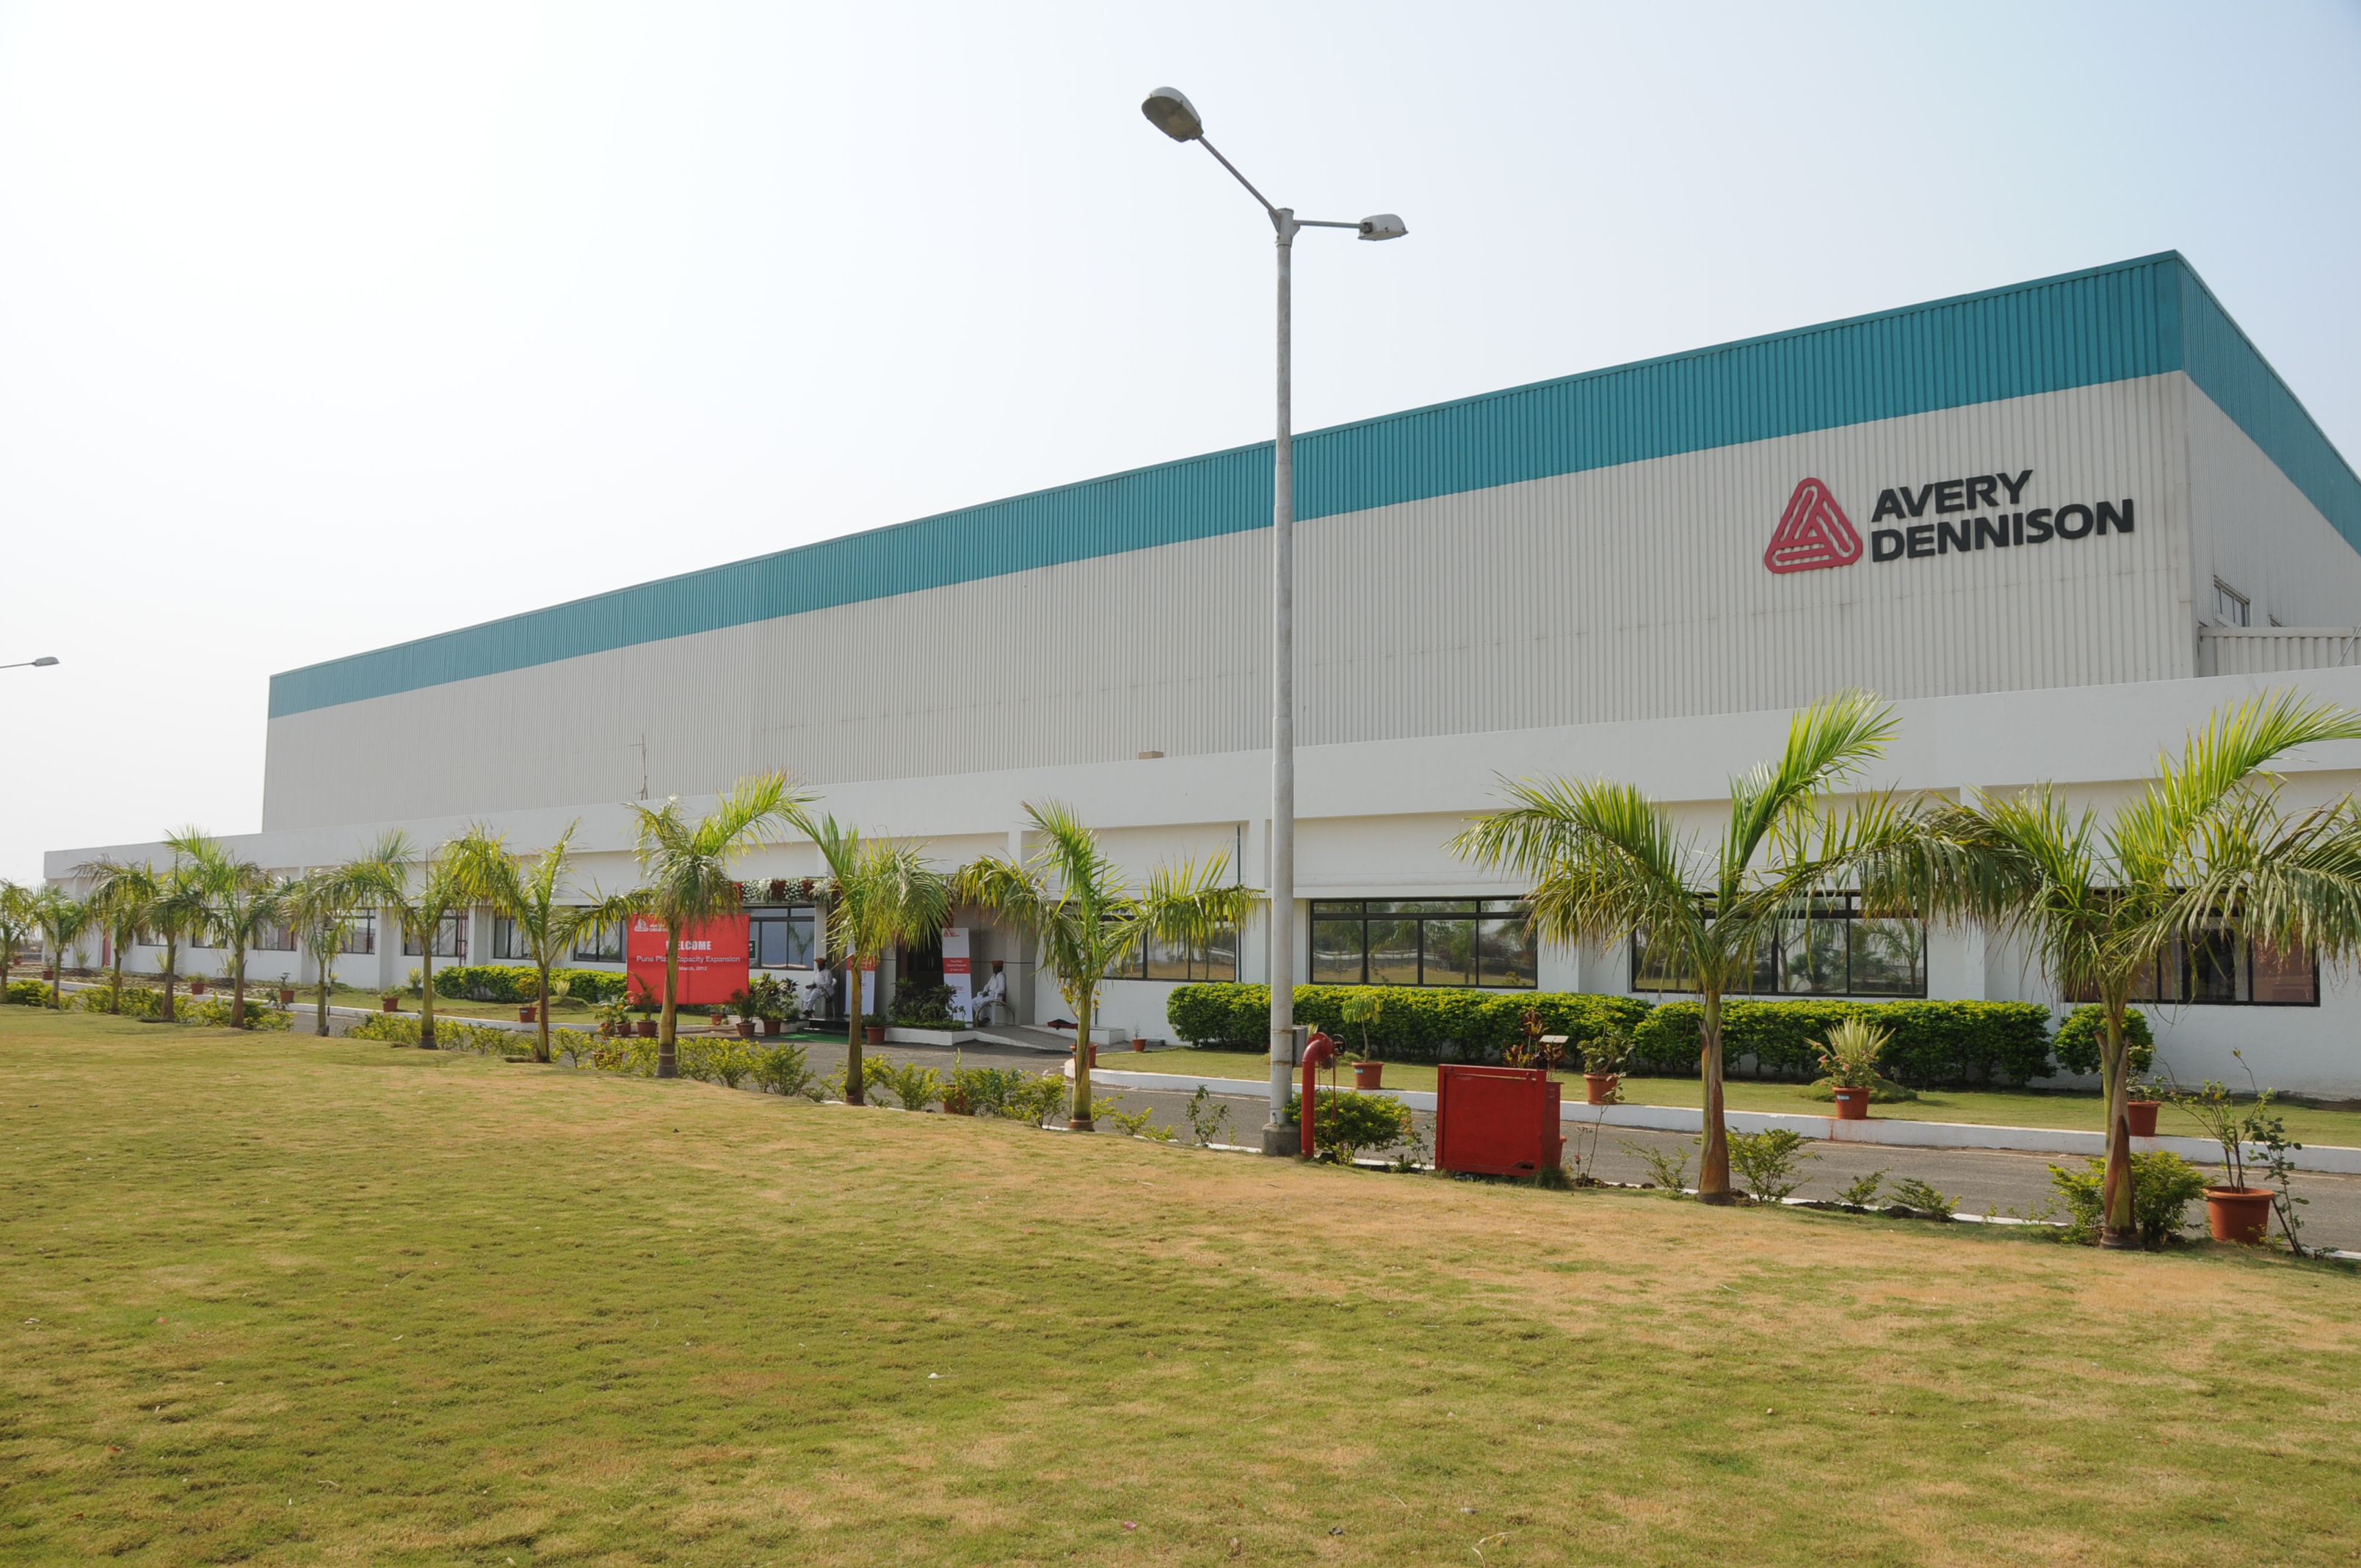 The Avery Dennison manufacturing plant in Pune, Maharashtra